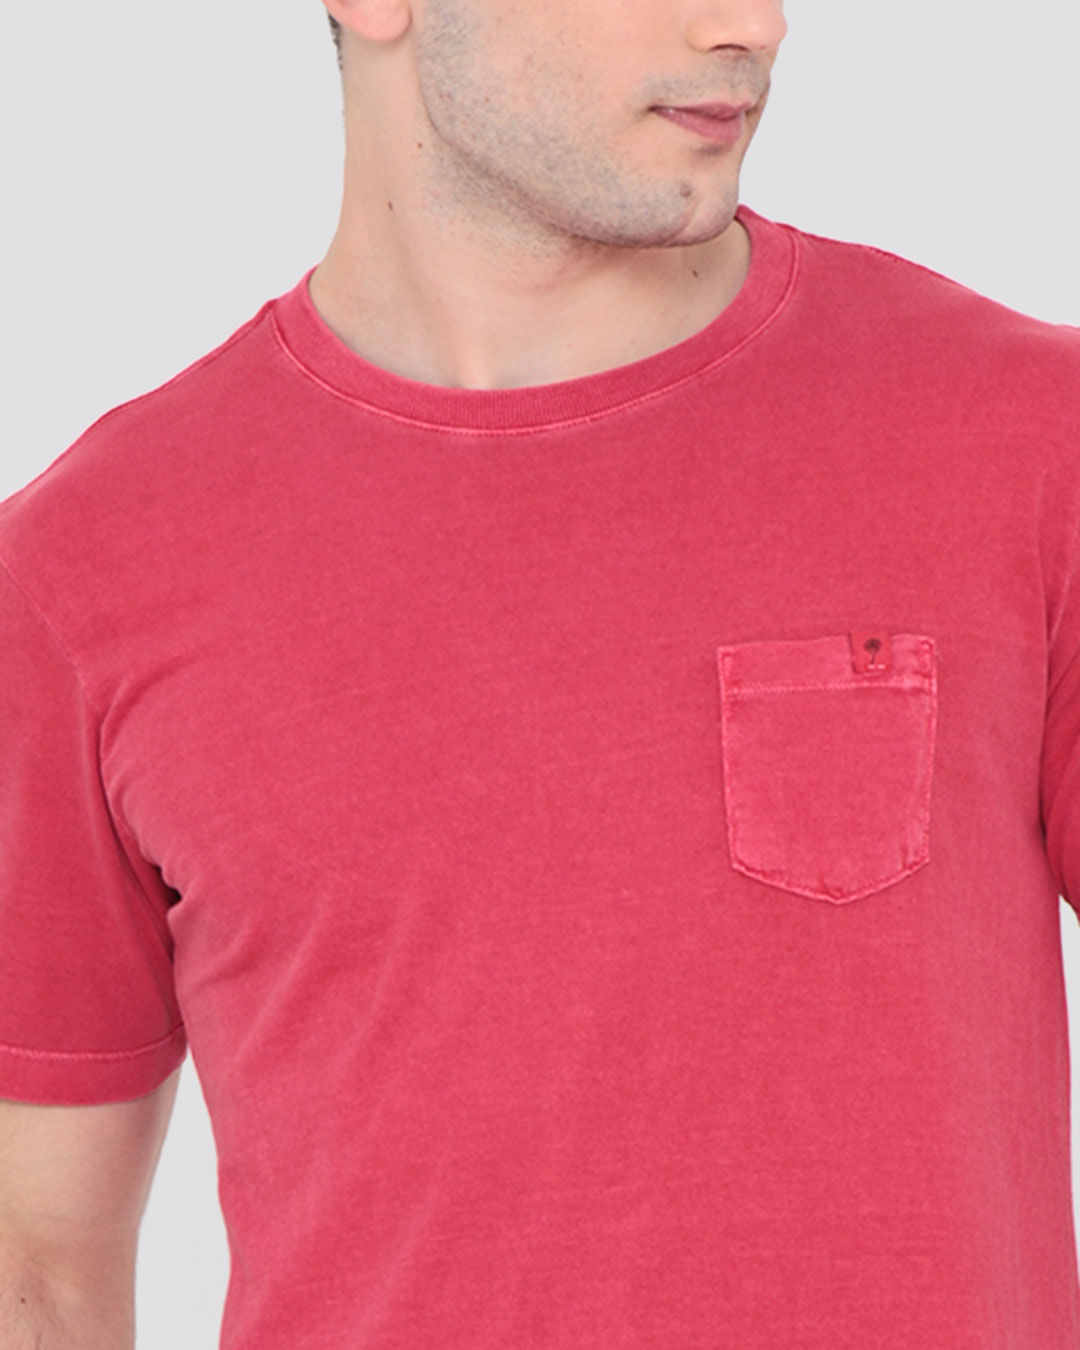 Camiseta-Bolso-Unico-Estonada-Vermelha